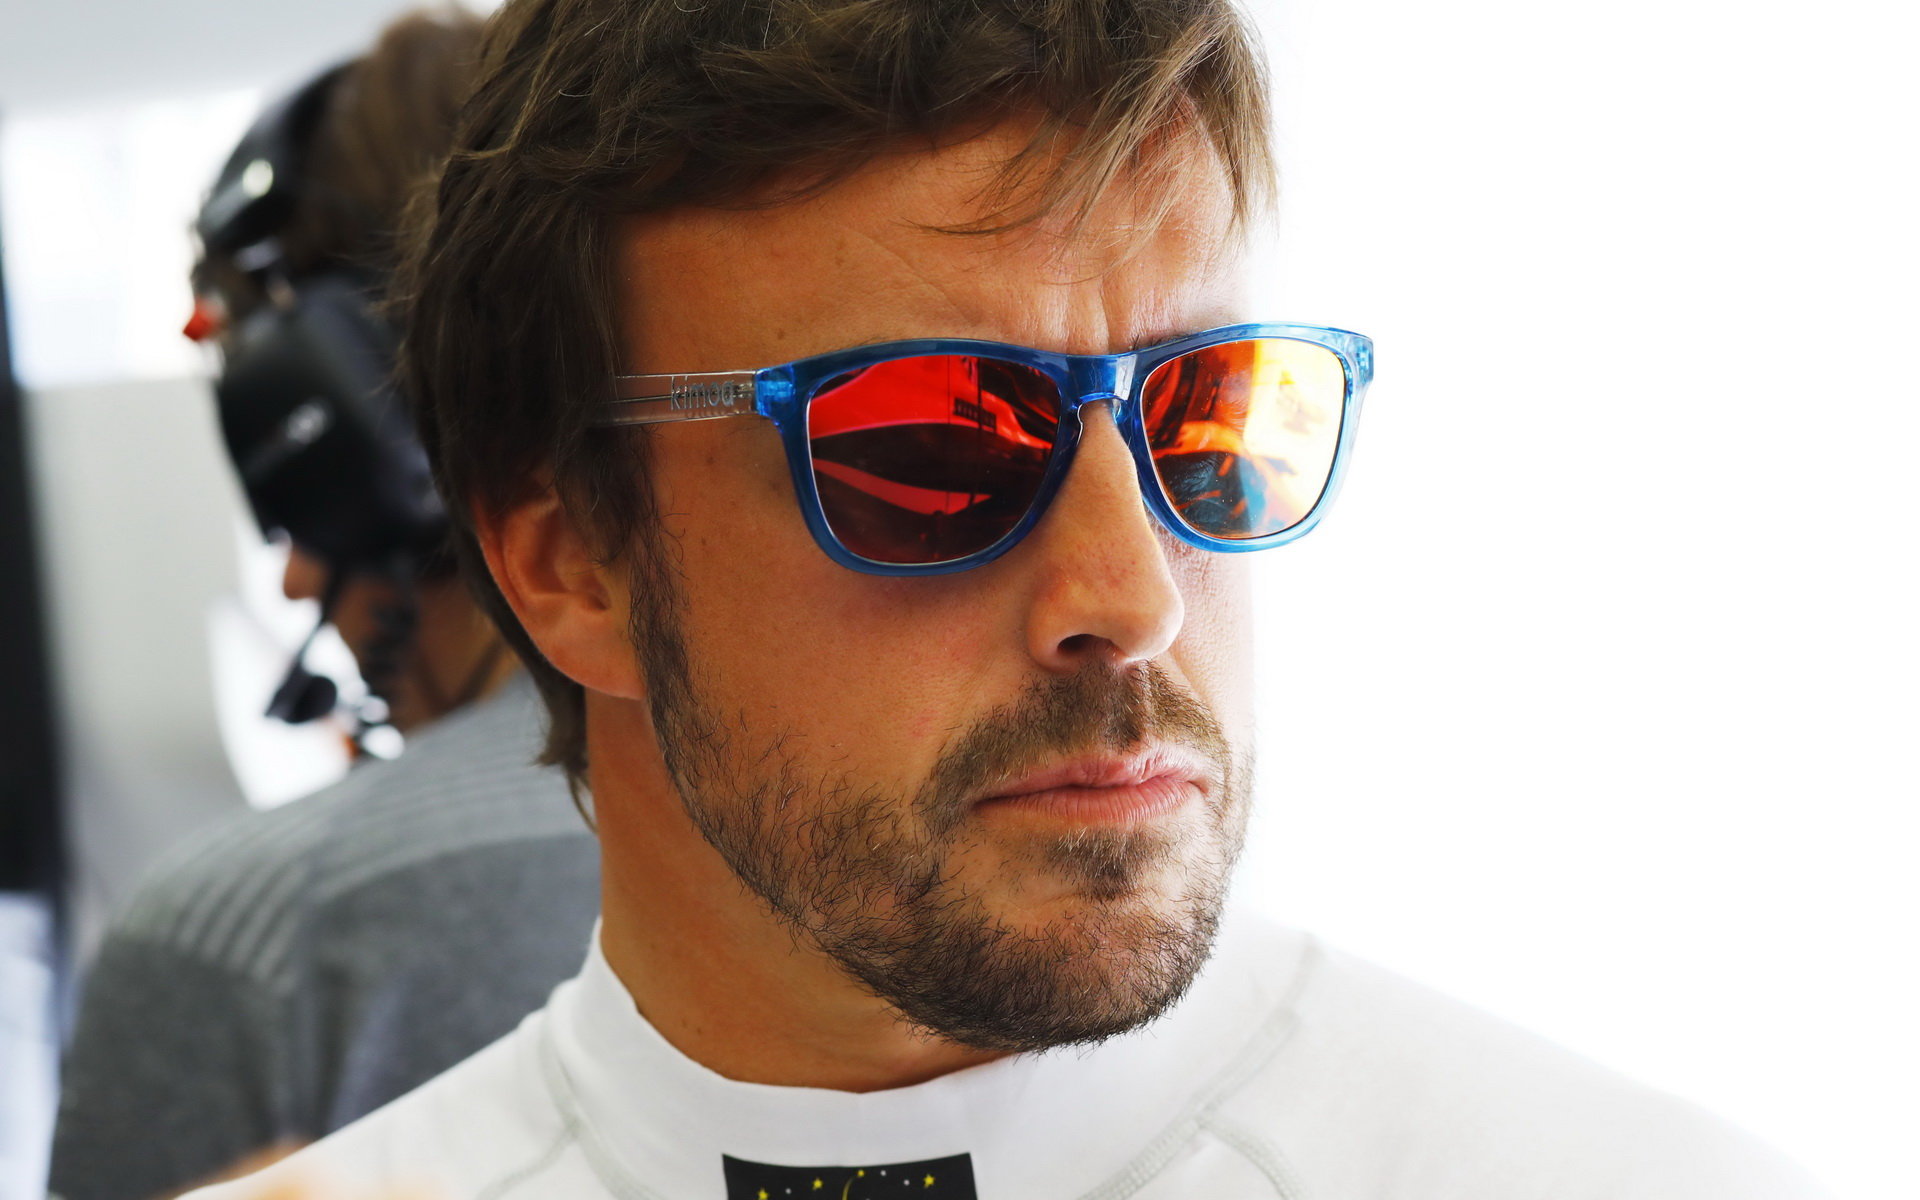 Fernando Alonso odmítá názory, že jeho motokárová trať je nebezpečná